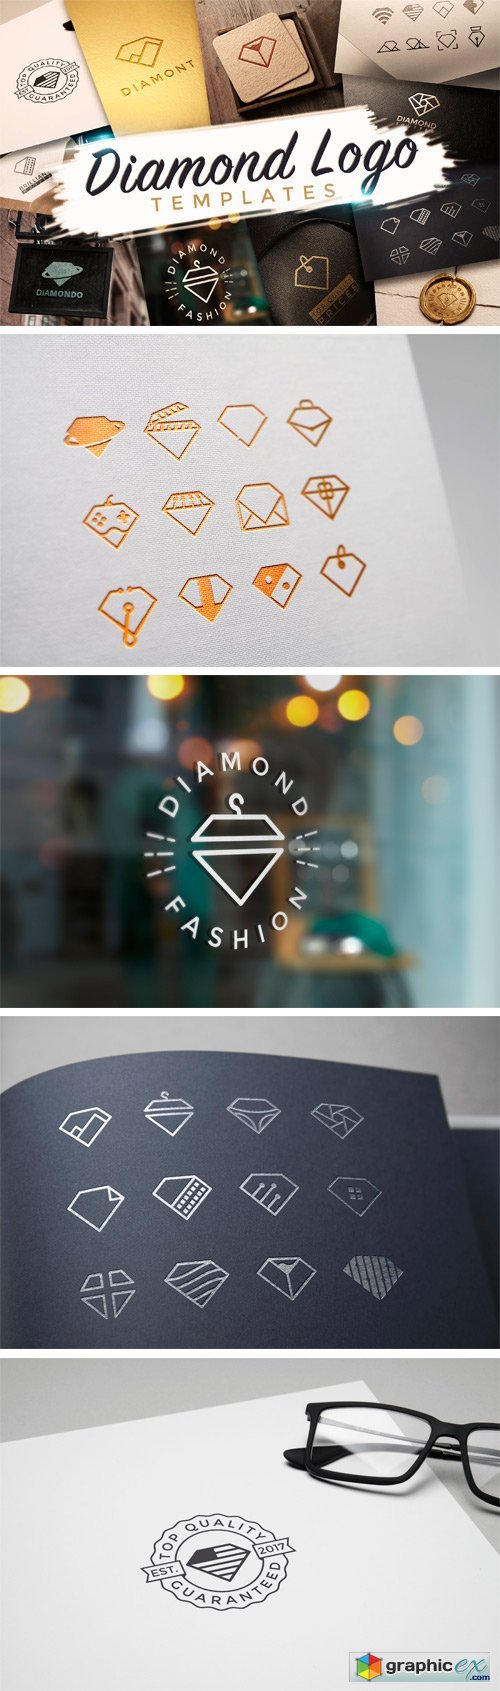 32 Brilliant Diamond Logo Templates